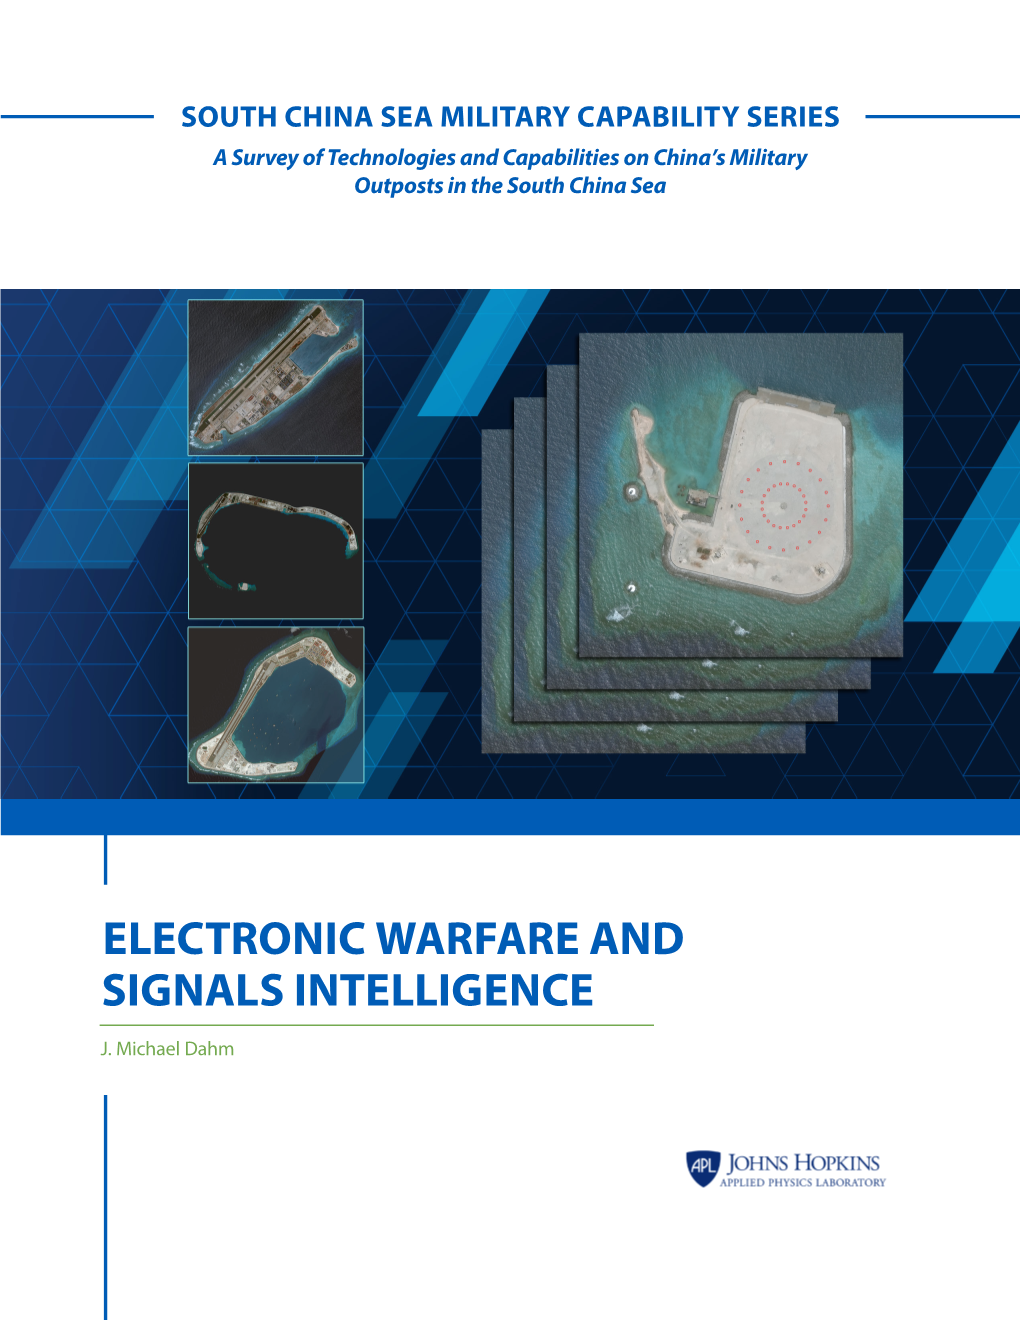 Electronic Warfare and Signals Intelligence